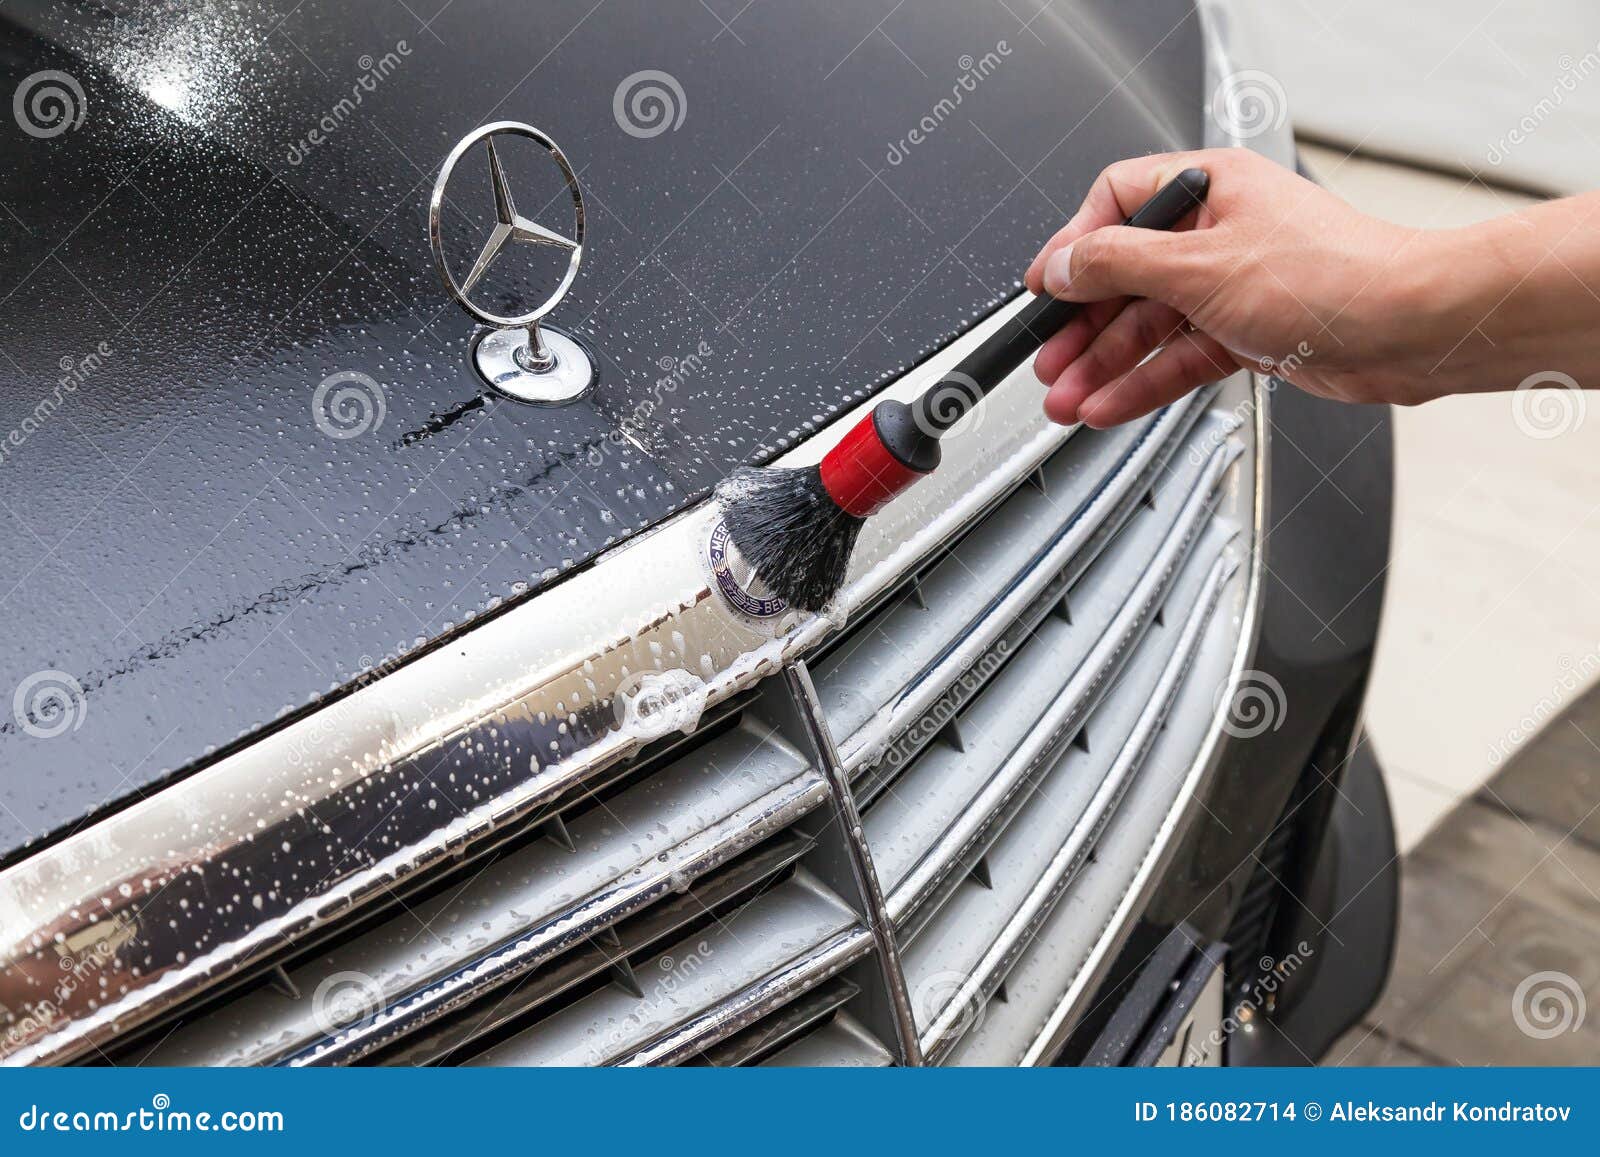 Covering Mercedes - Clean Car